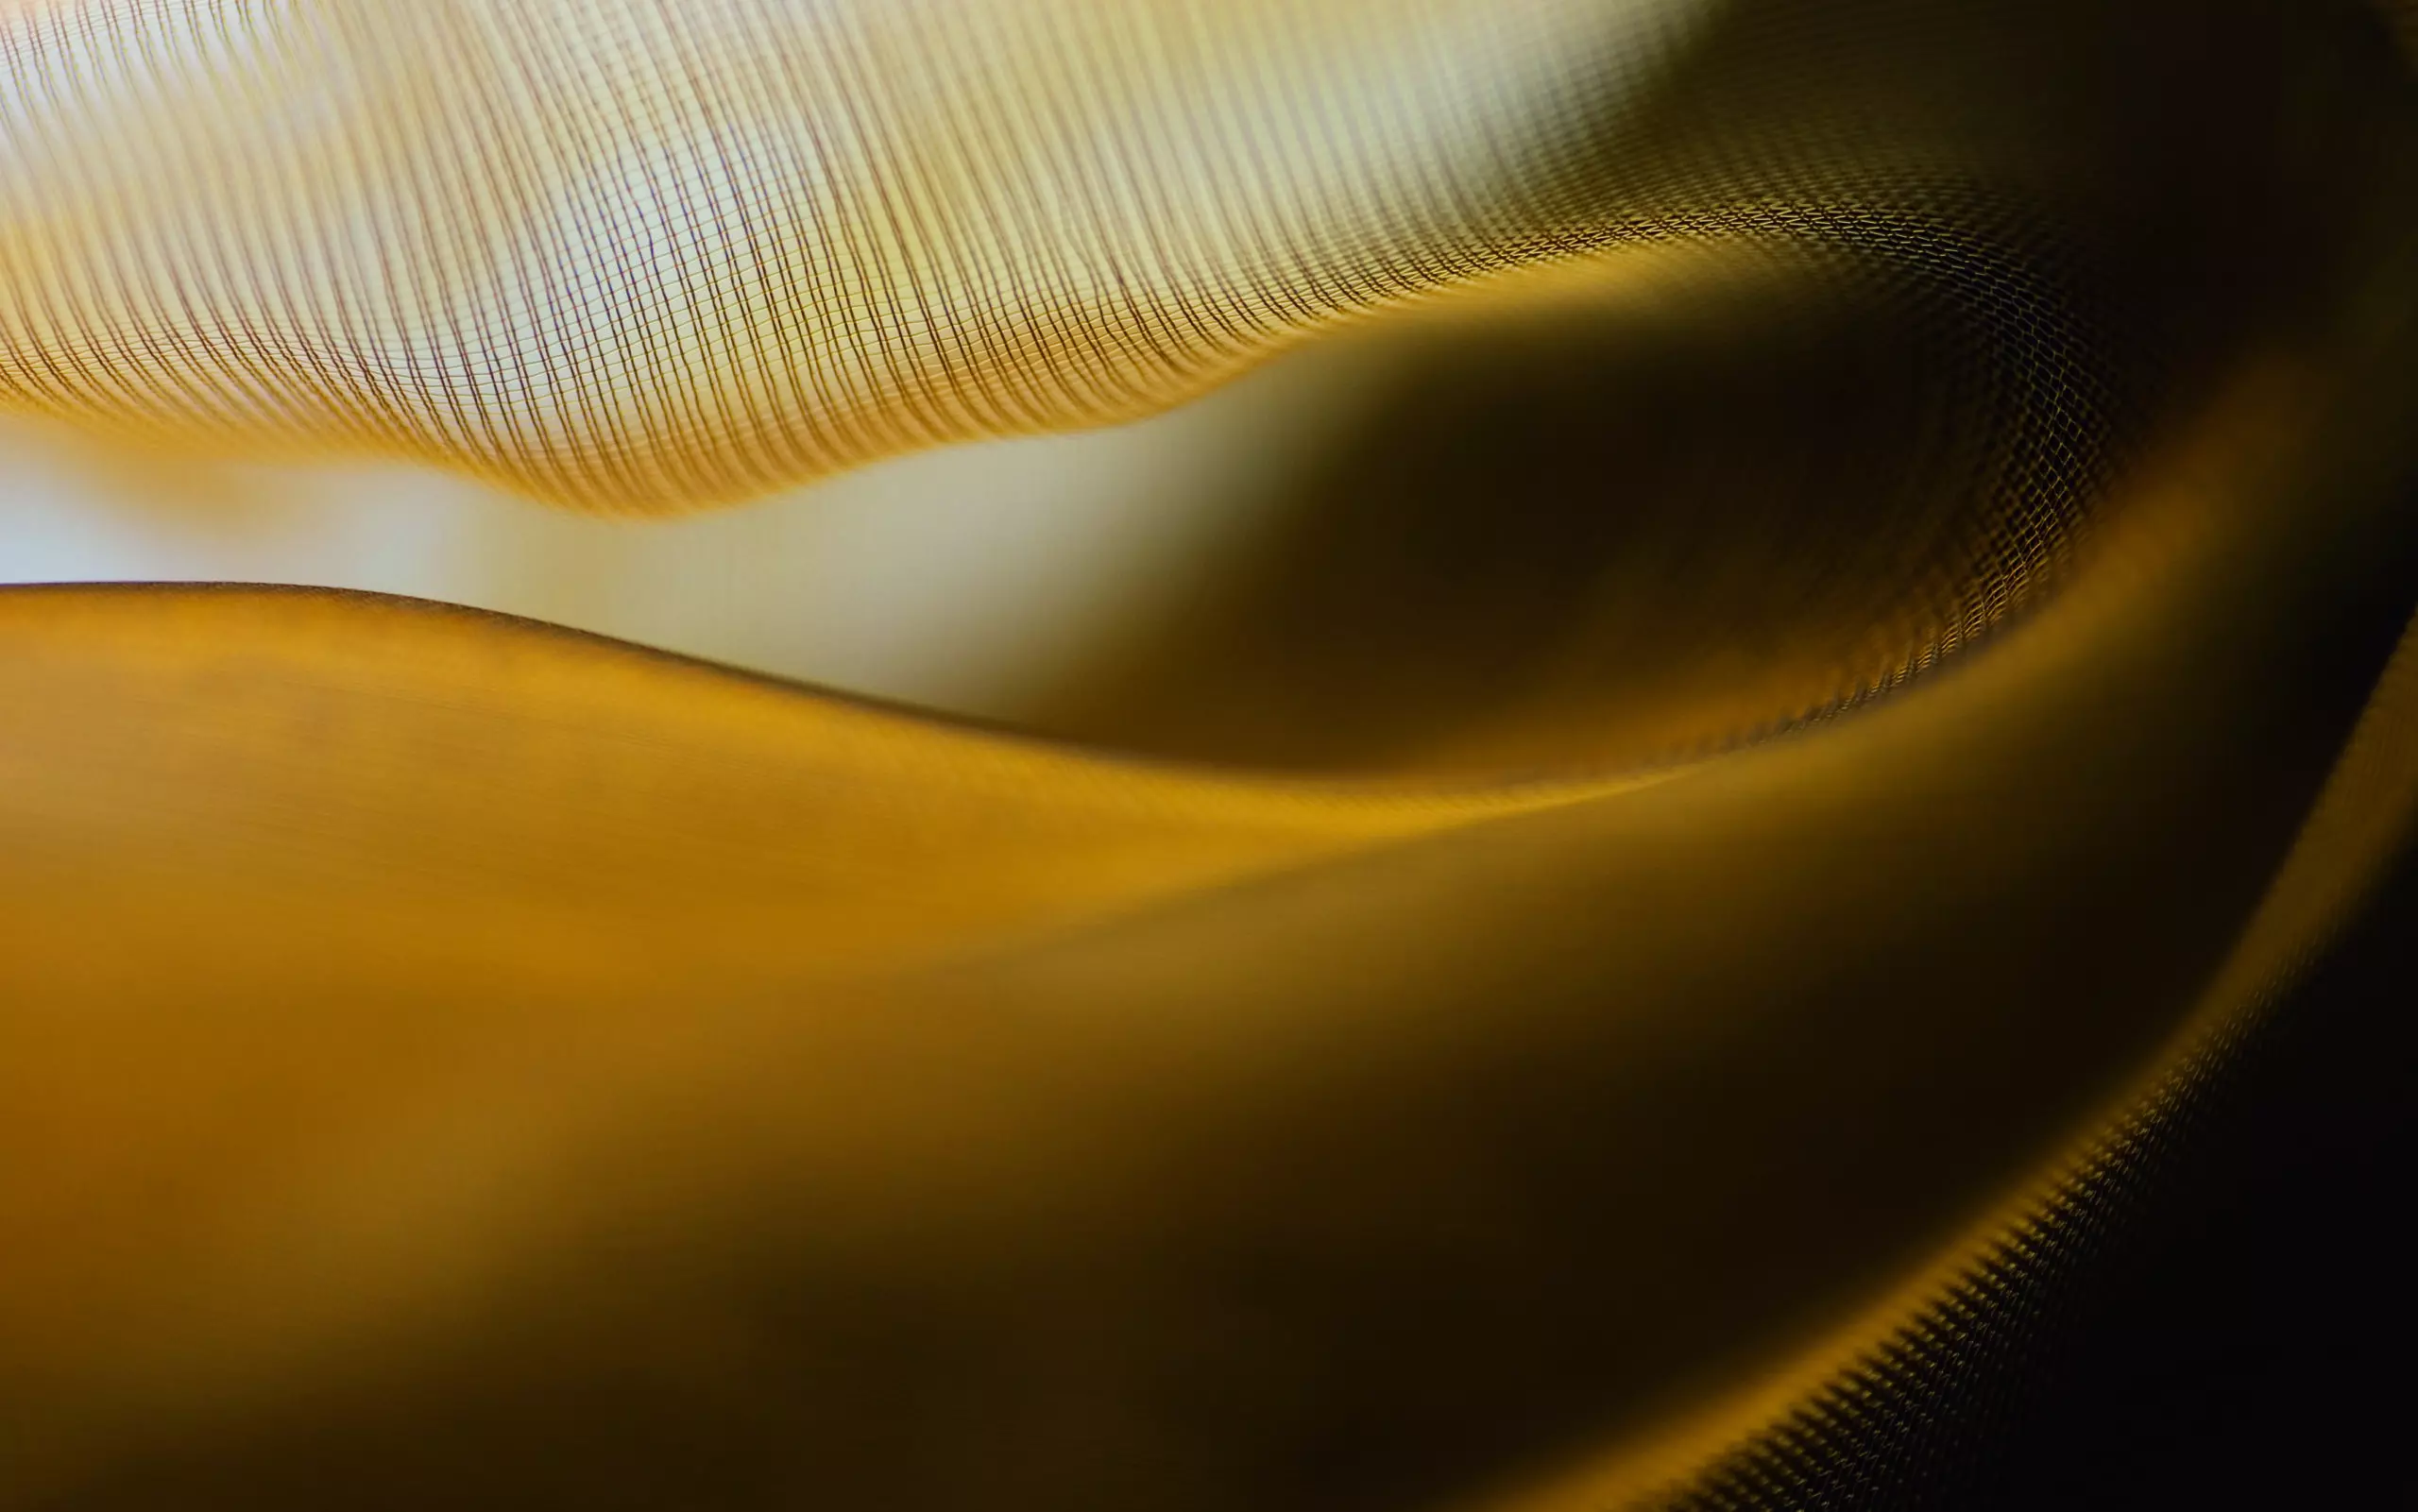 Wandbild (5126) Fields of Gold by Carola Onkamo präsentiert: Kreatives,Details und Strukturen,Abstrakt,Sonstiges Kreatives